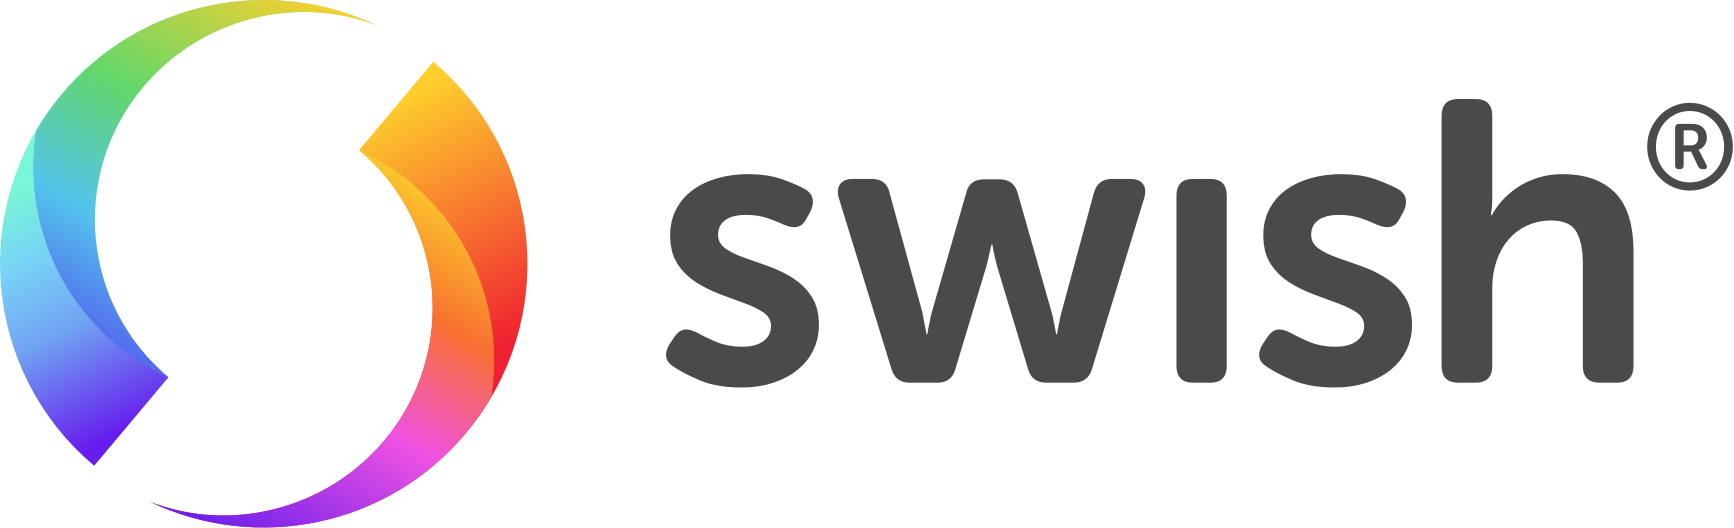 Swish logotype